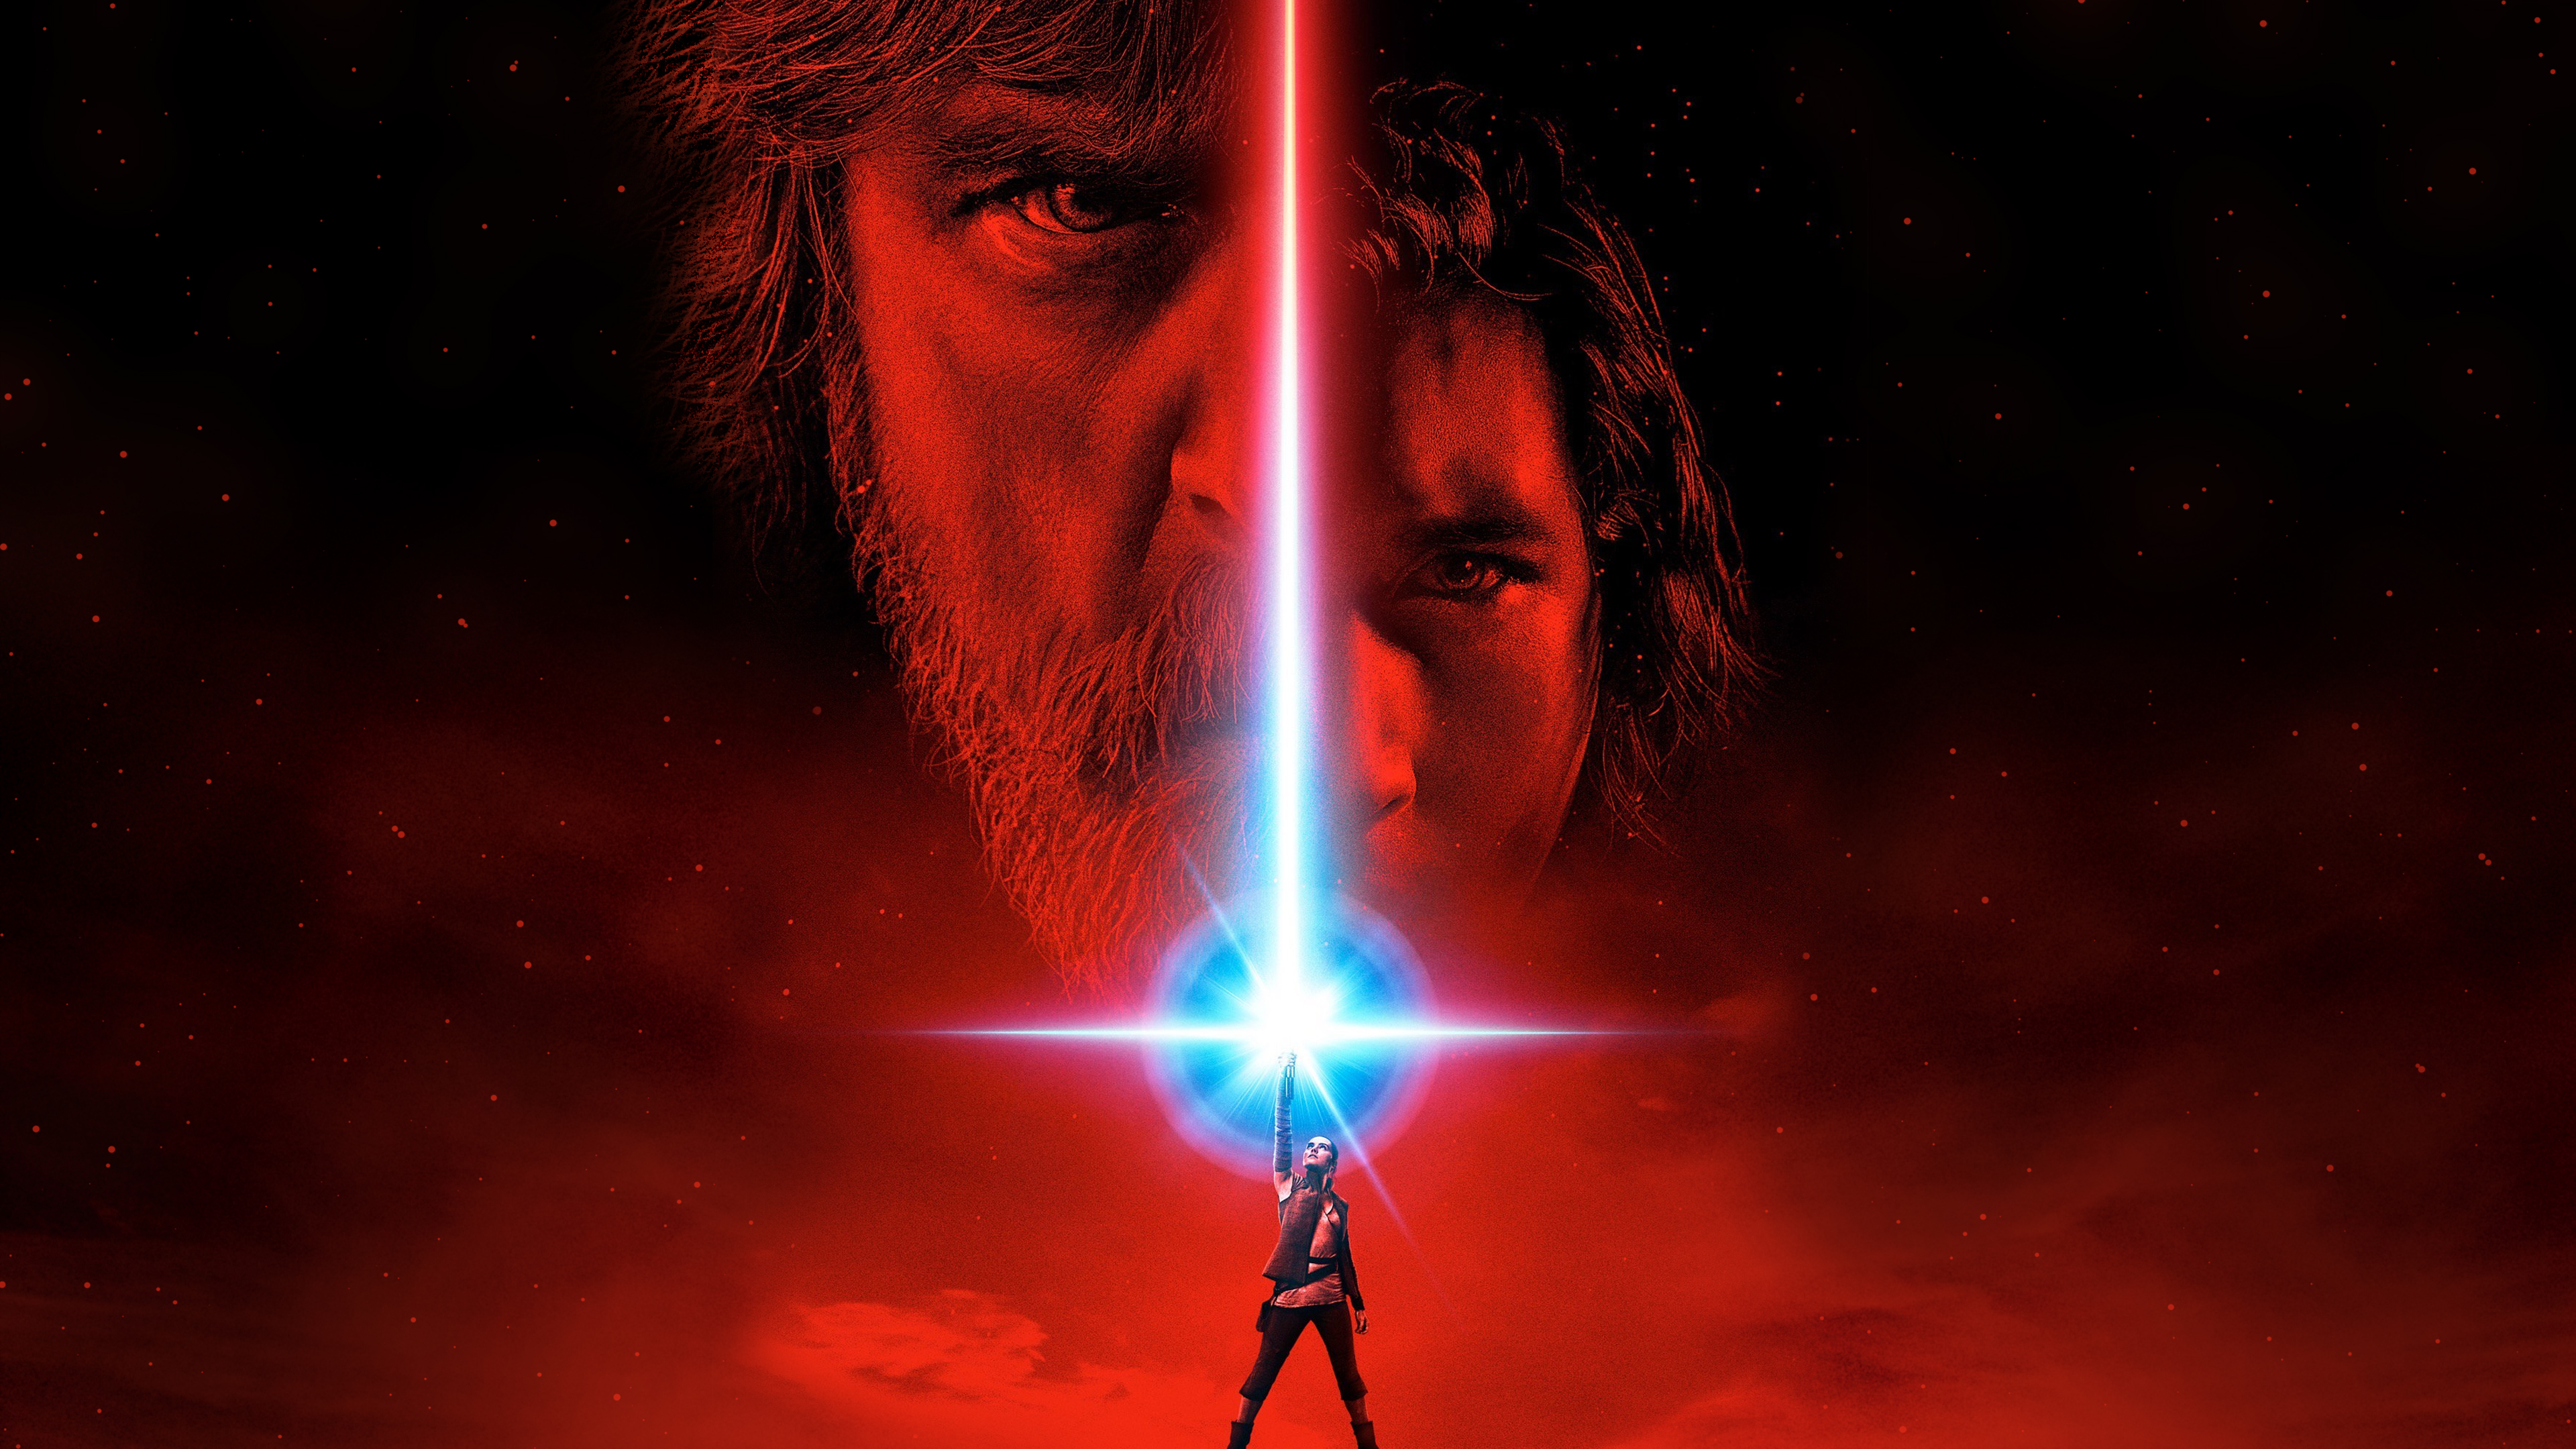 Star Wars Star Wars The Last Jedi Luke Skywalker Lightsaber Movie Poster Kylo Ren Star Wars Heroes S 3840x2160